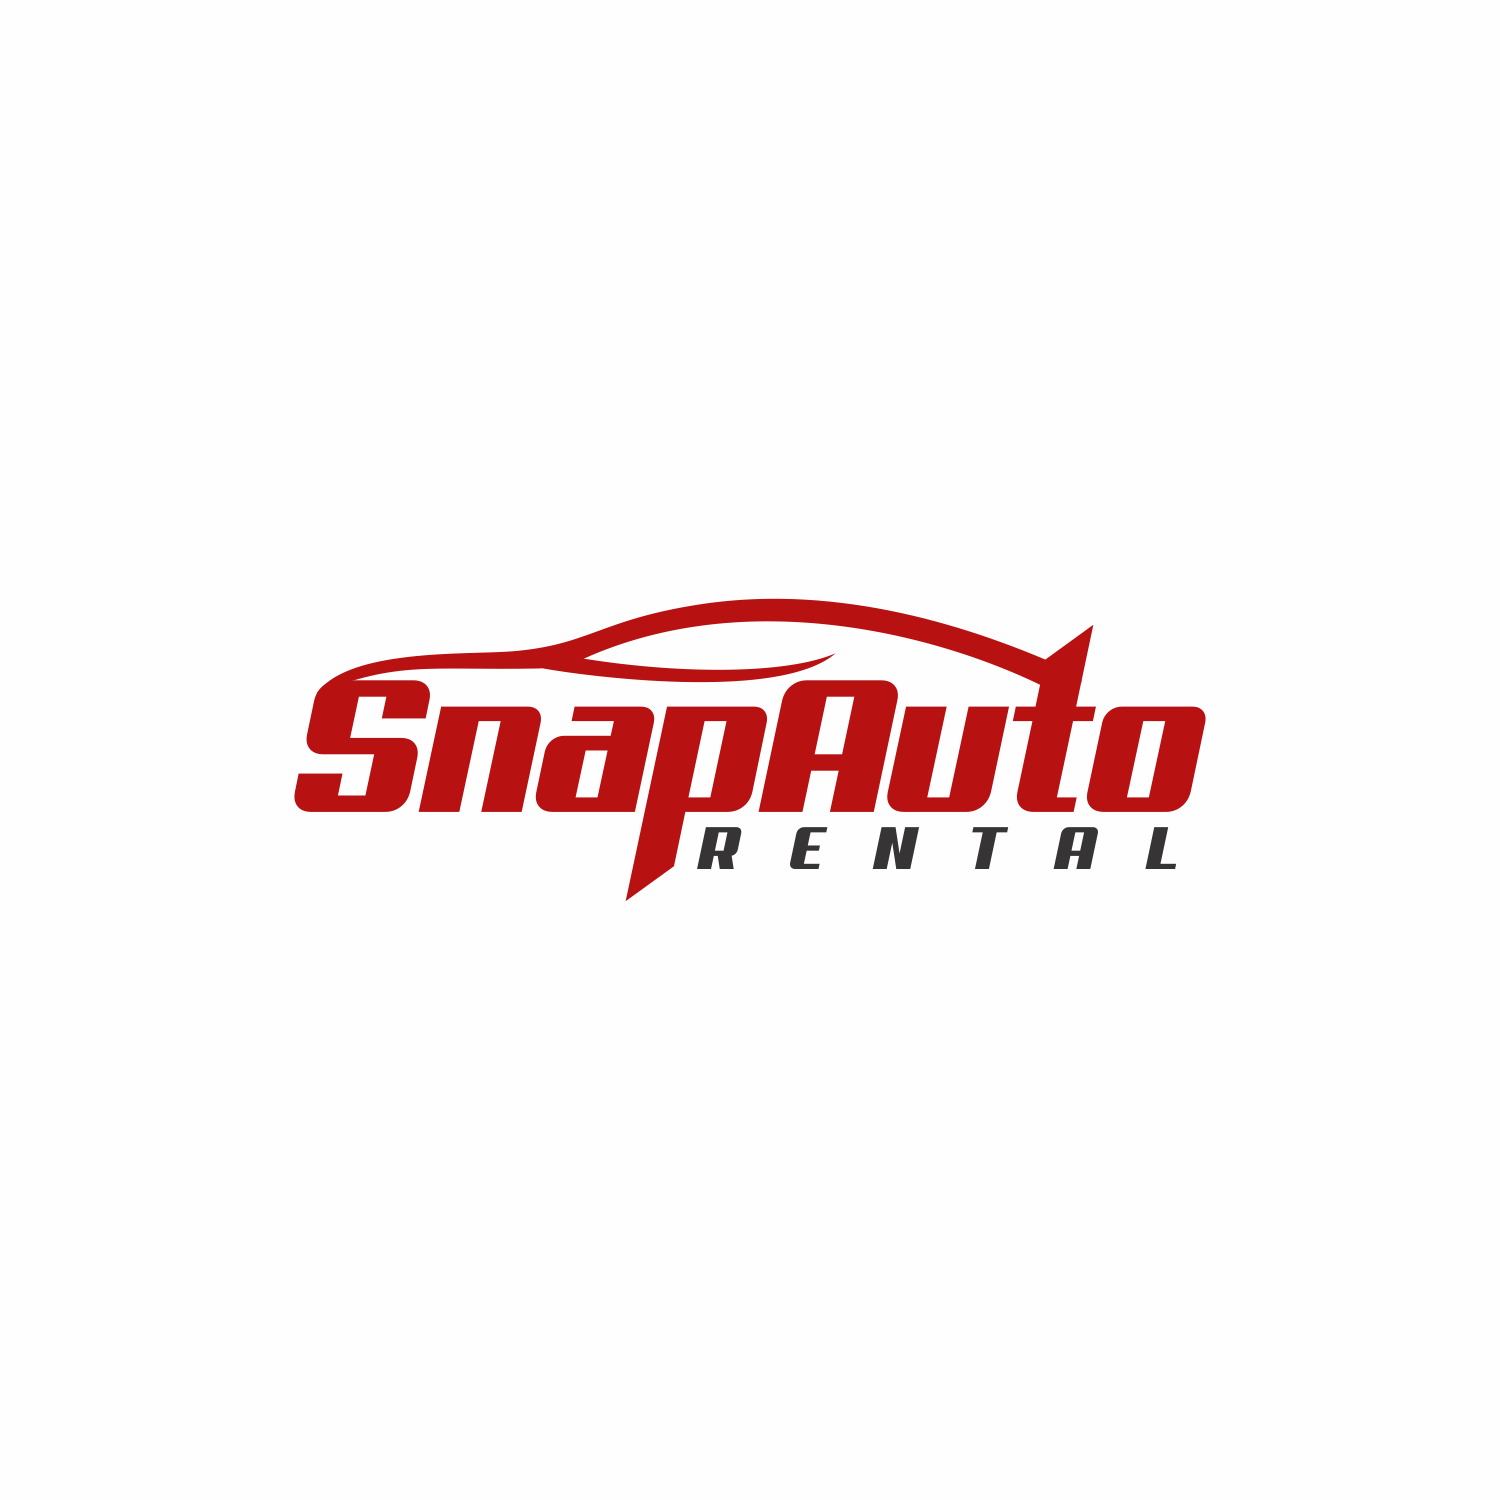 Red Rental Logo - Elegant, Playful, Car Rental Logo Design for Snap Auto Rental